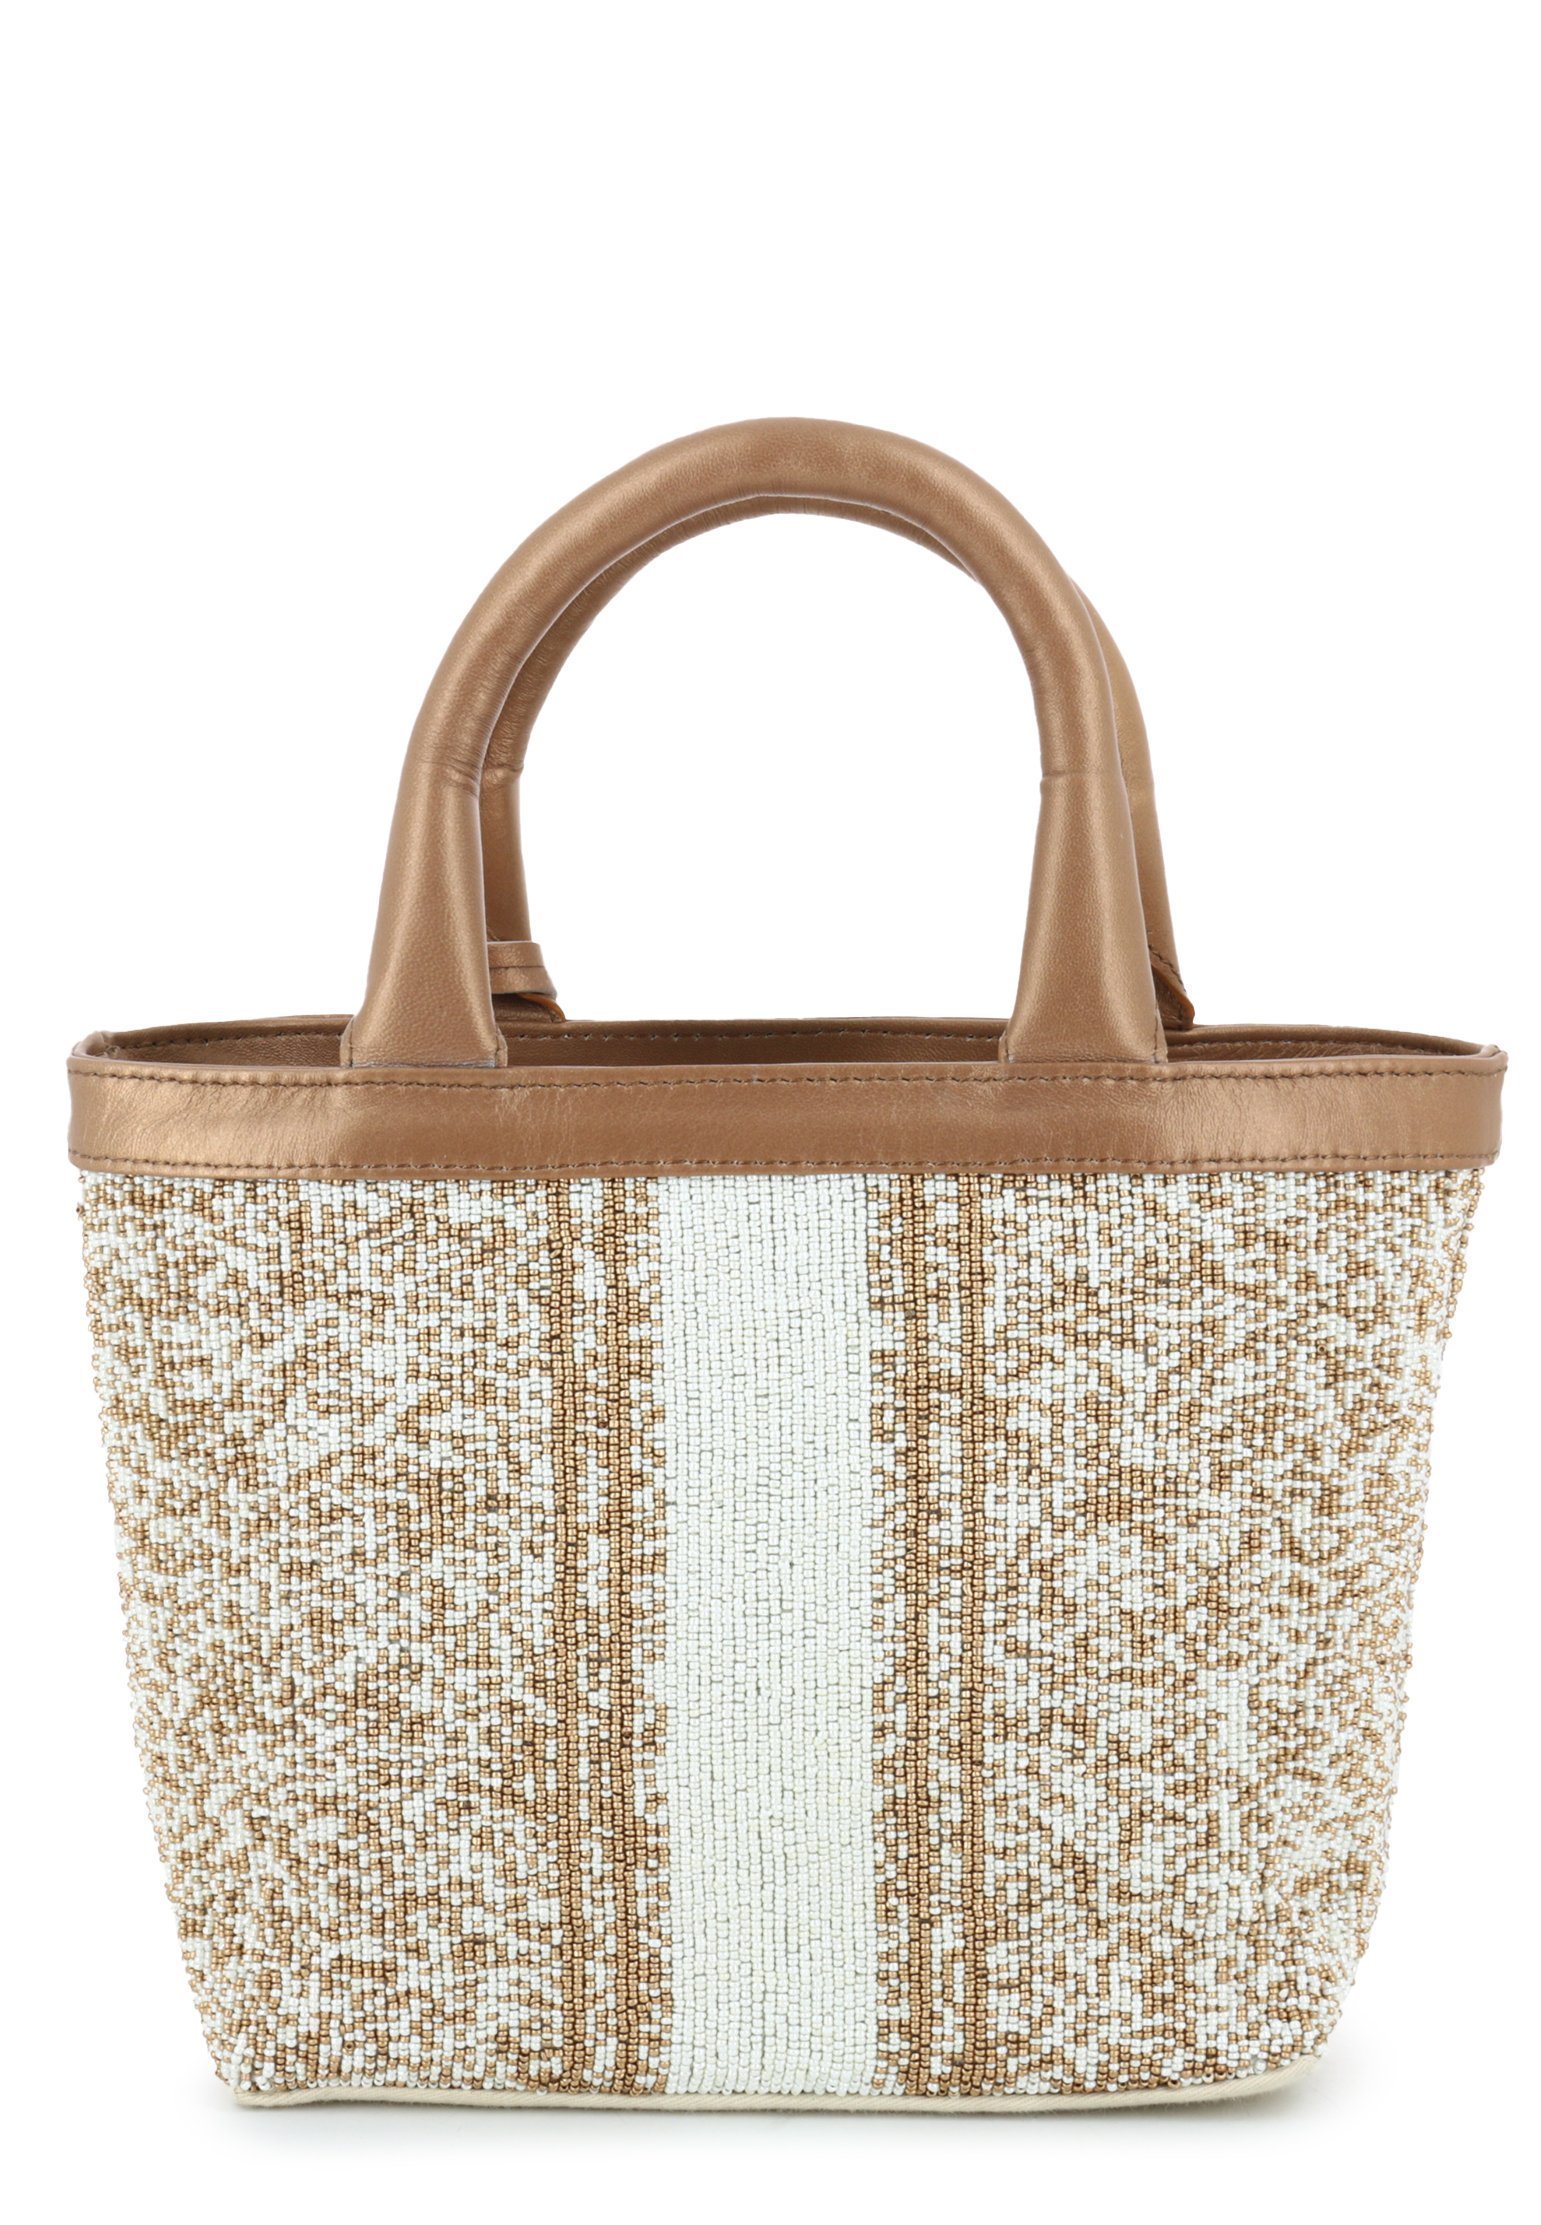 Bag DE SIENA Color: white (Code: 2316) in online store Allure